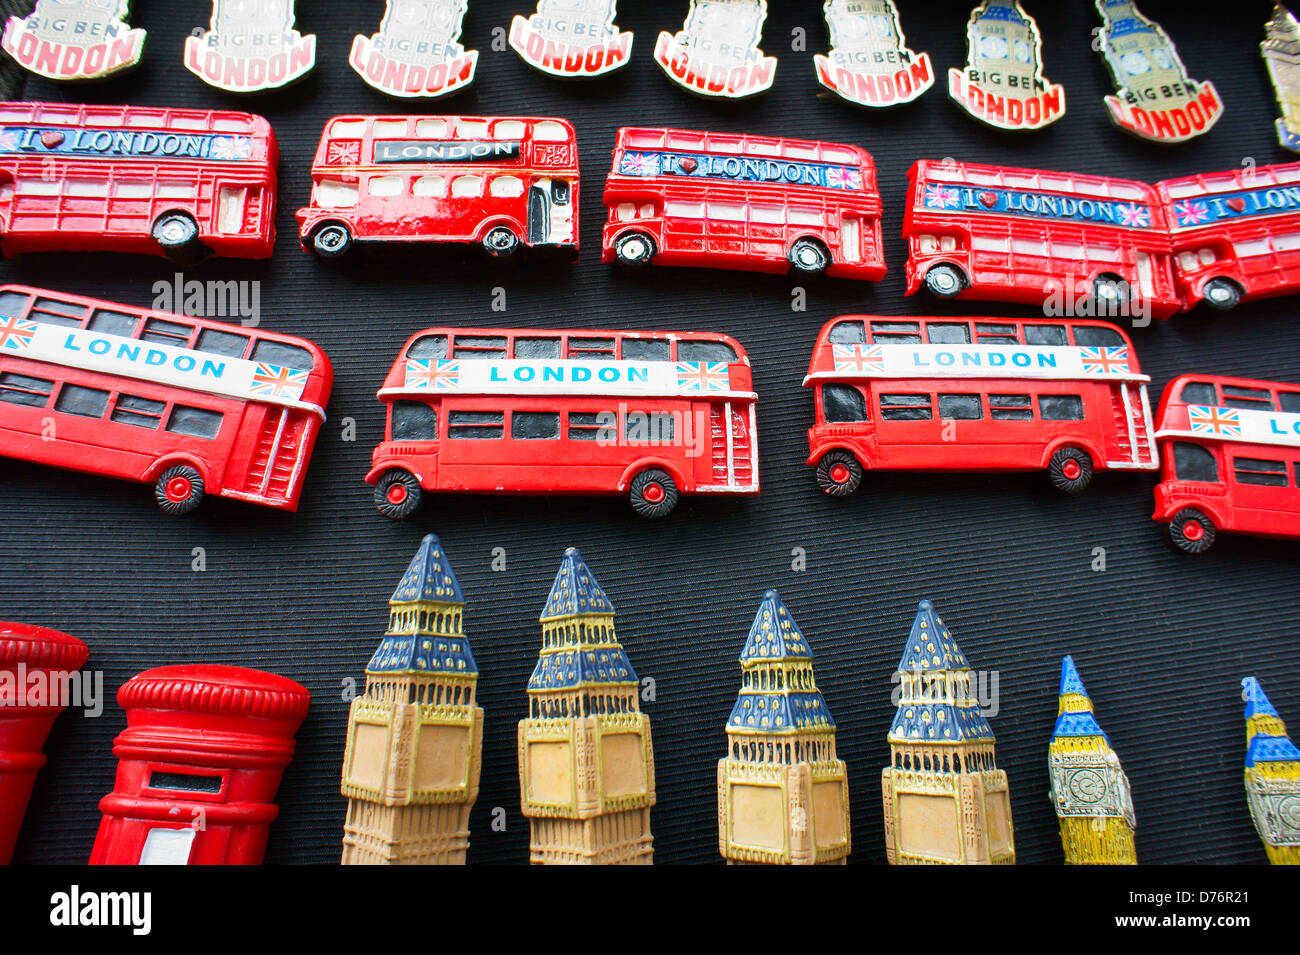 Londra, Inghilterra vacanza turistica souvenir magnete frigo badge. Bus rosso, telefono box computer kiosk e Big Ben Foto Stock